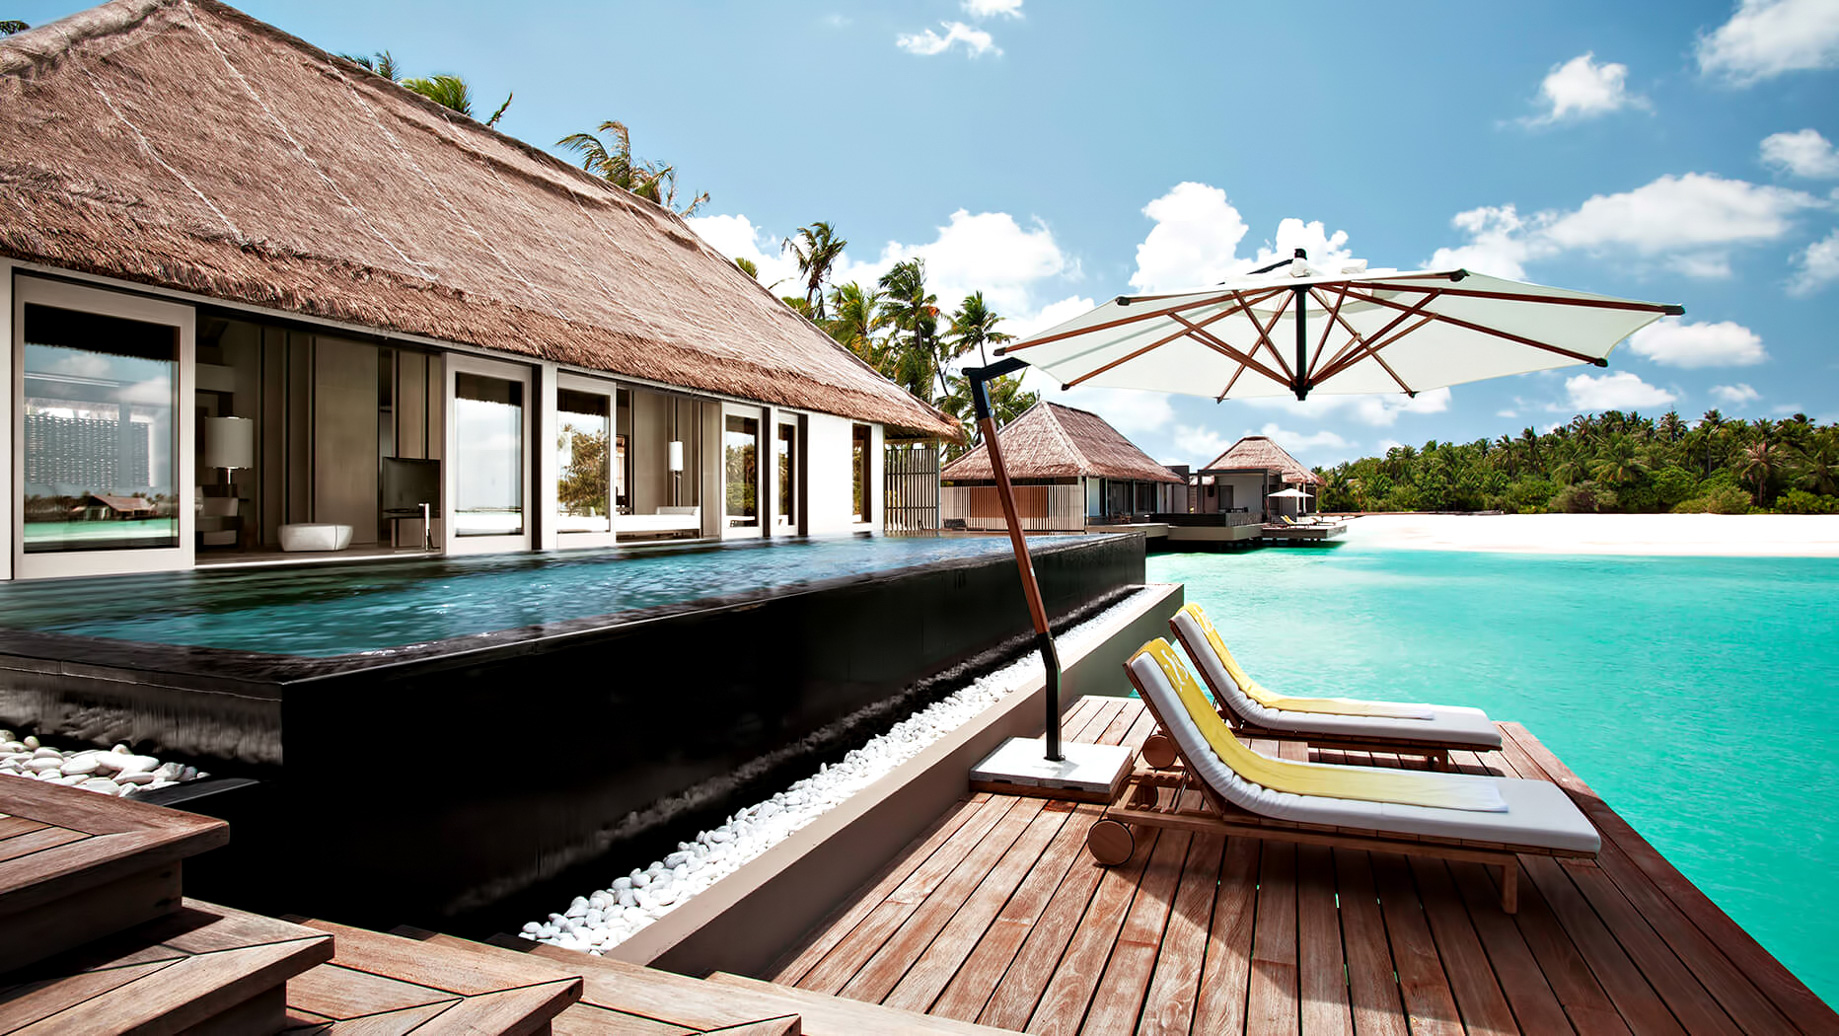 Cheval Blanc Randheli Resort – Noonu Atoll, Maldives – Overwater Villa Infinity Pool Deck